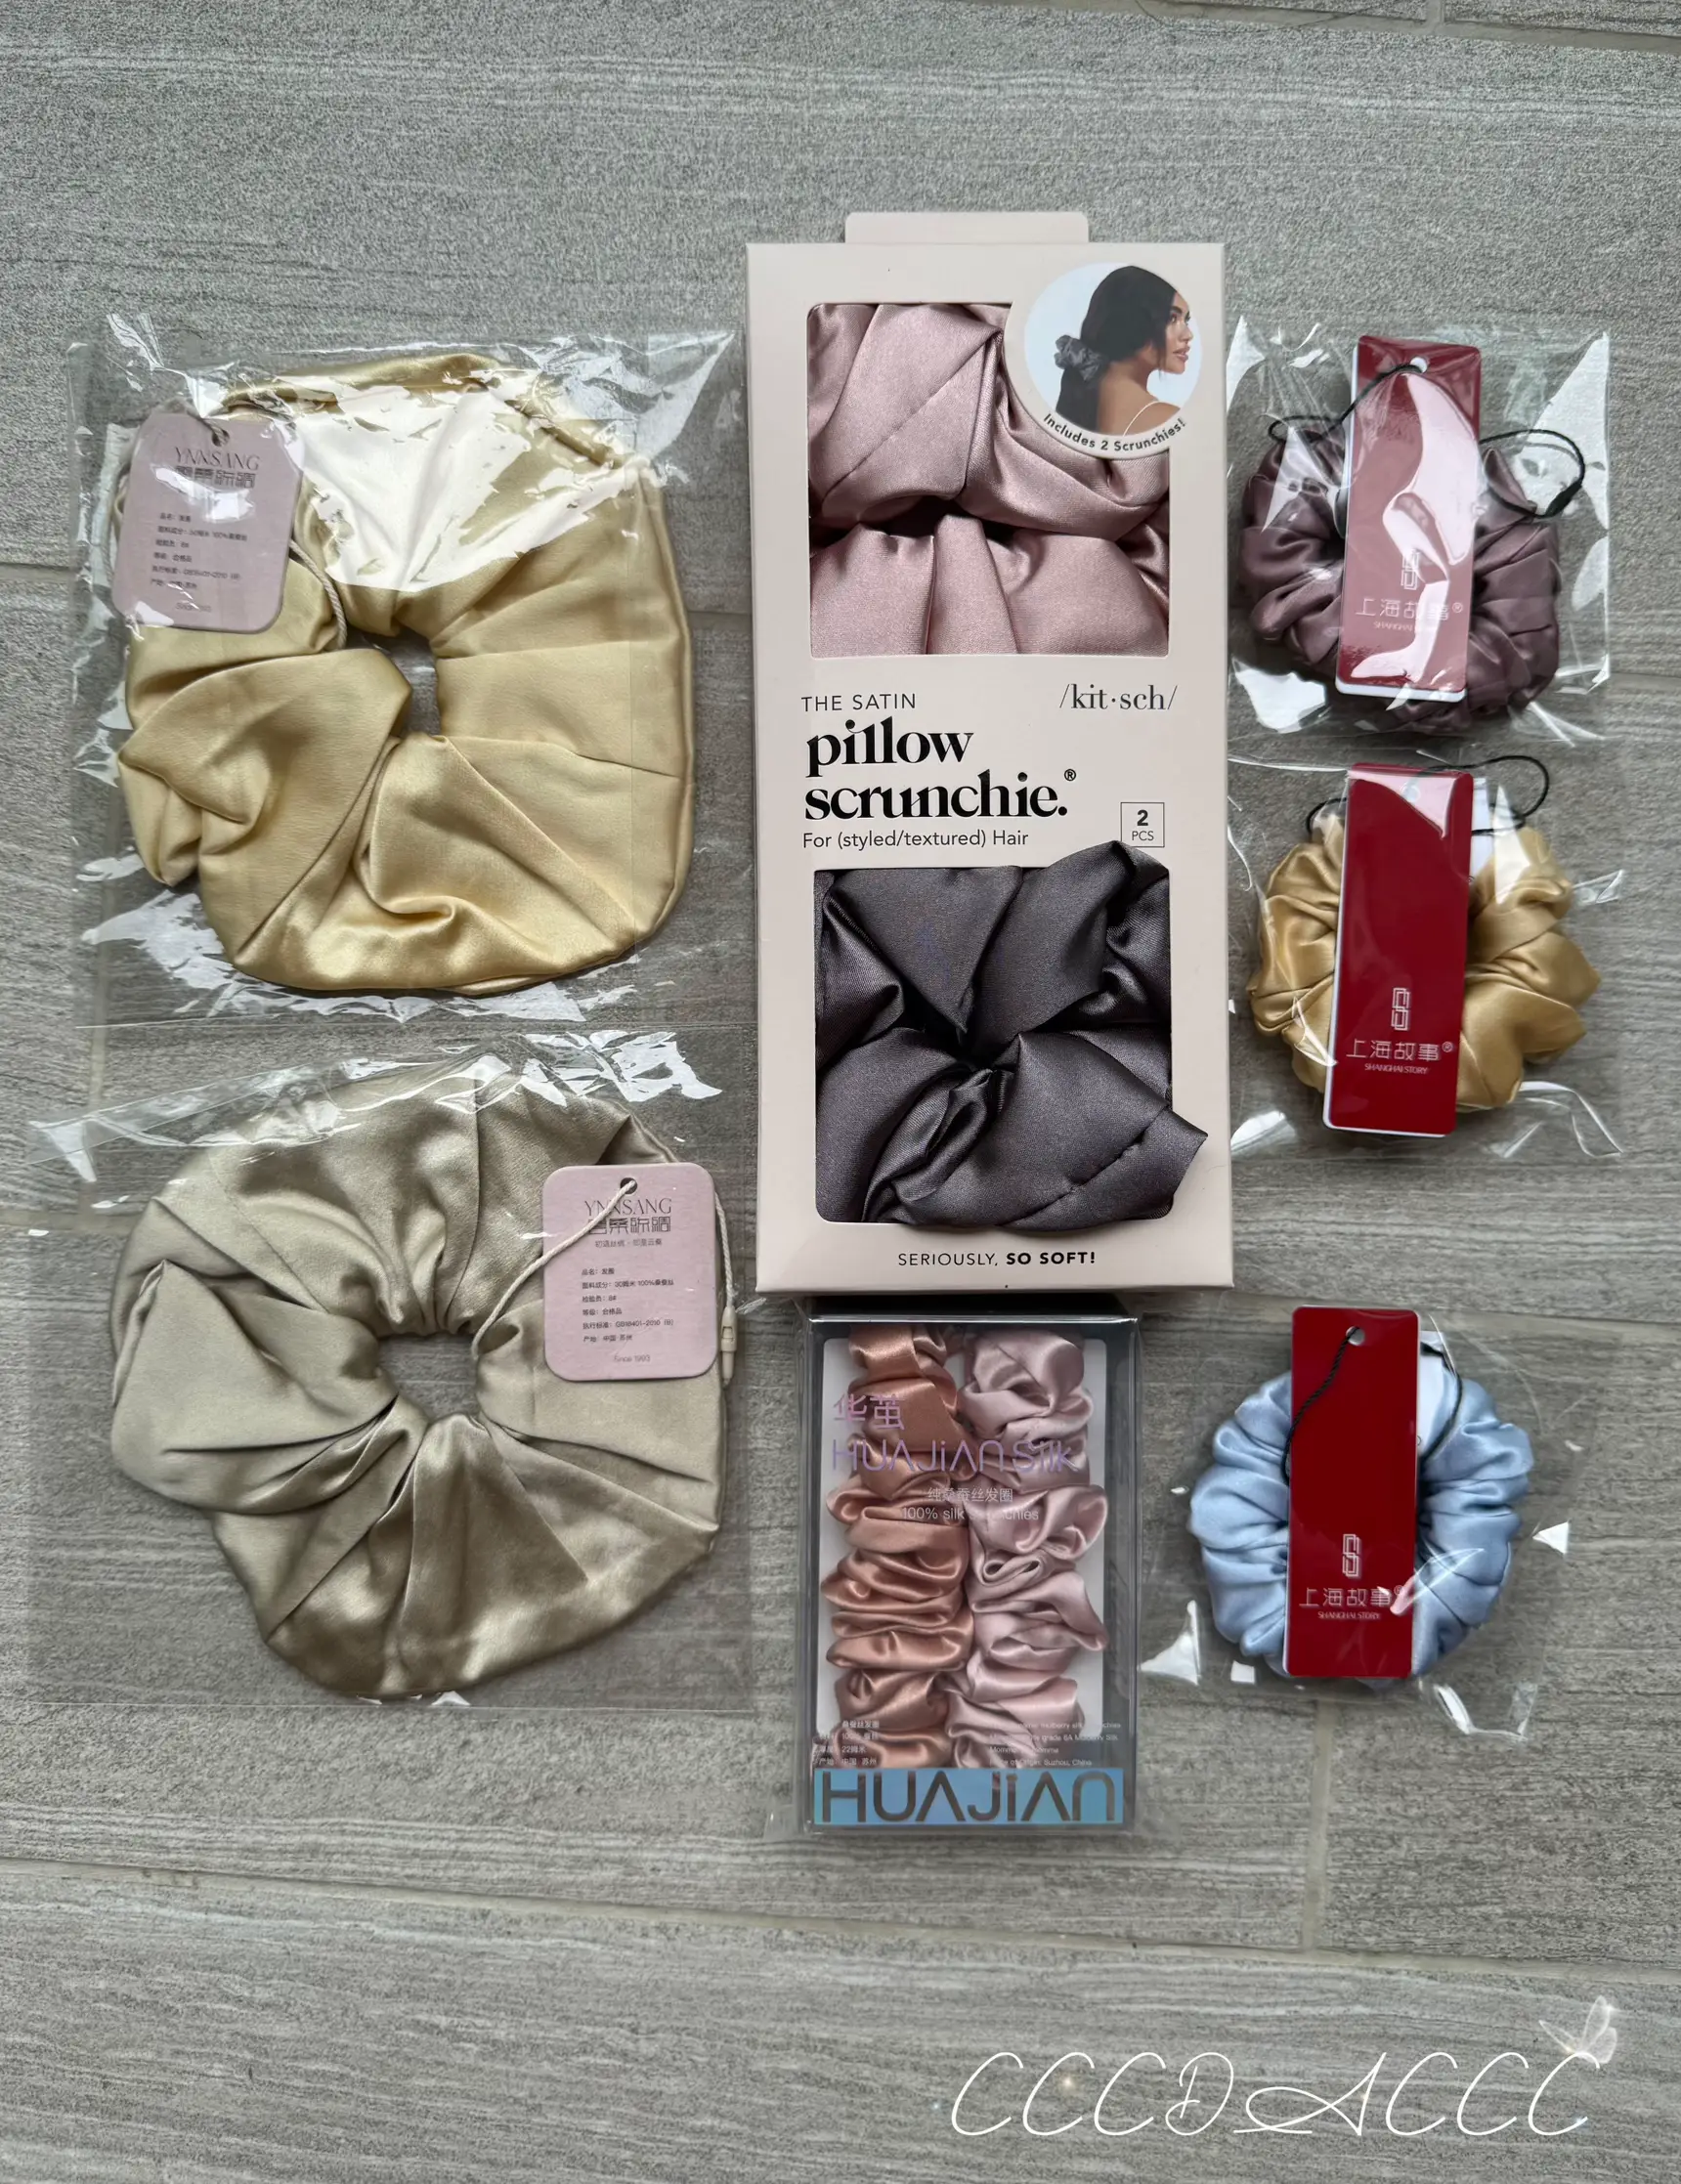 Satin Sleep Pillow Scrunchies - Blush/Gray – KITSCH